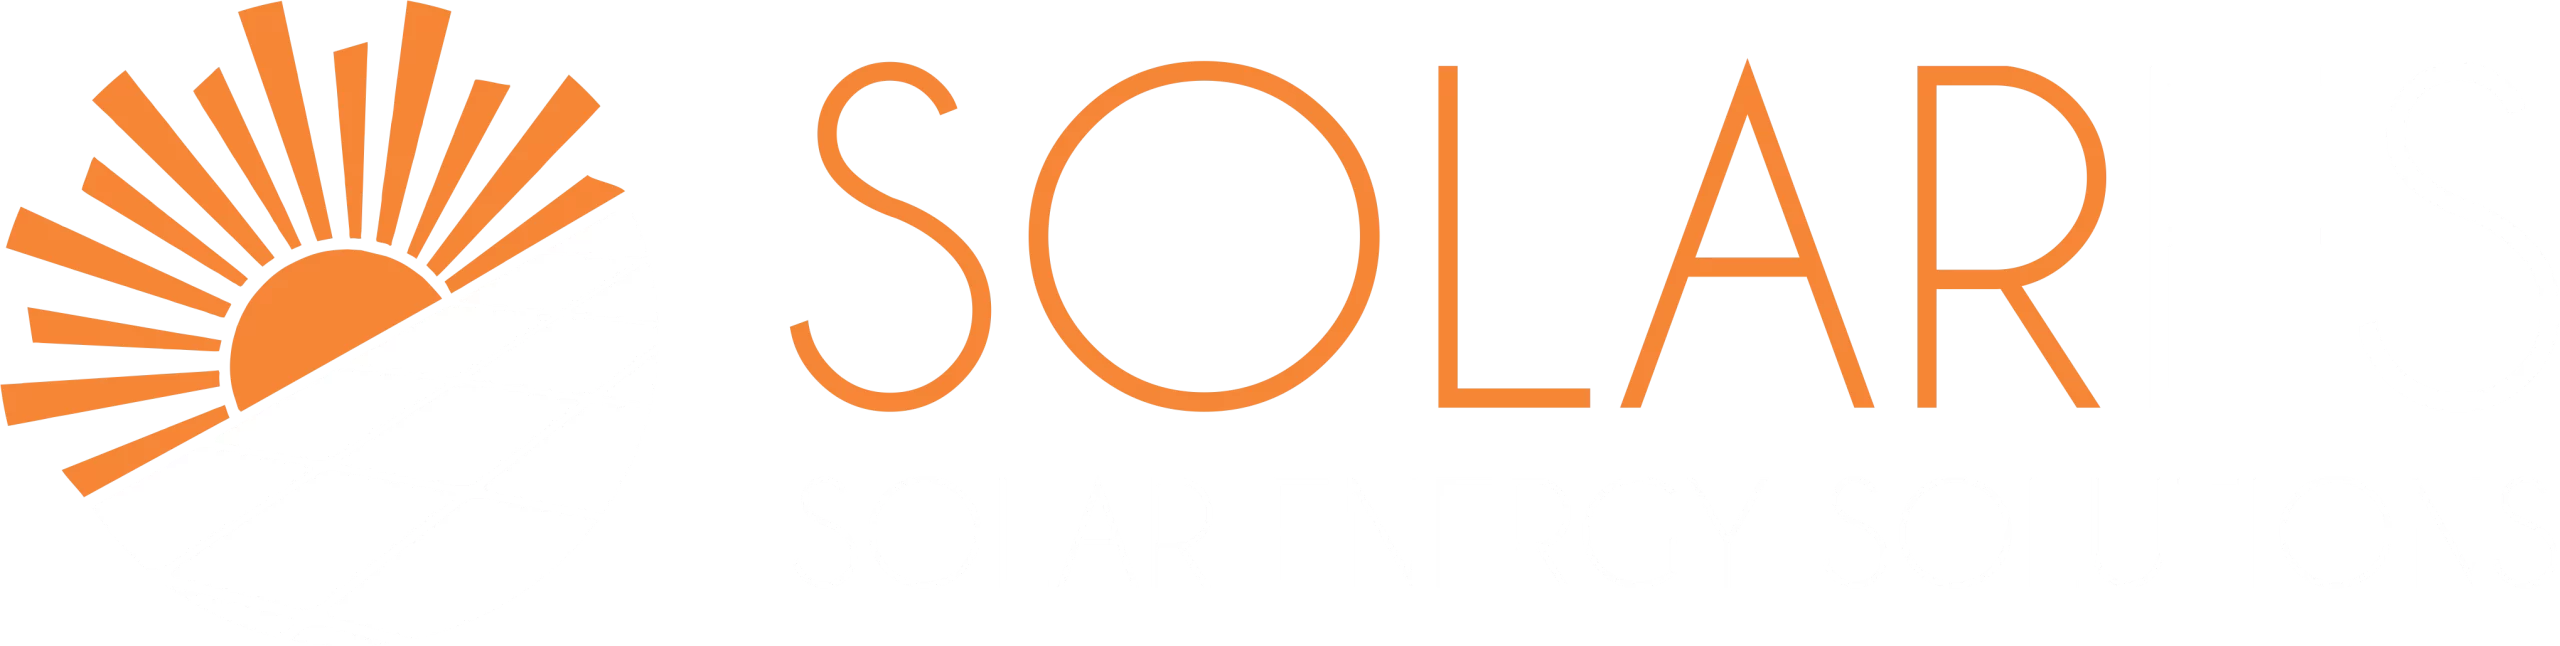 final-logo-solares albania